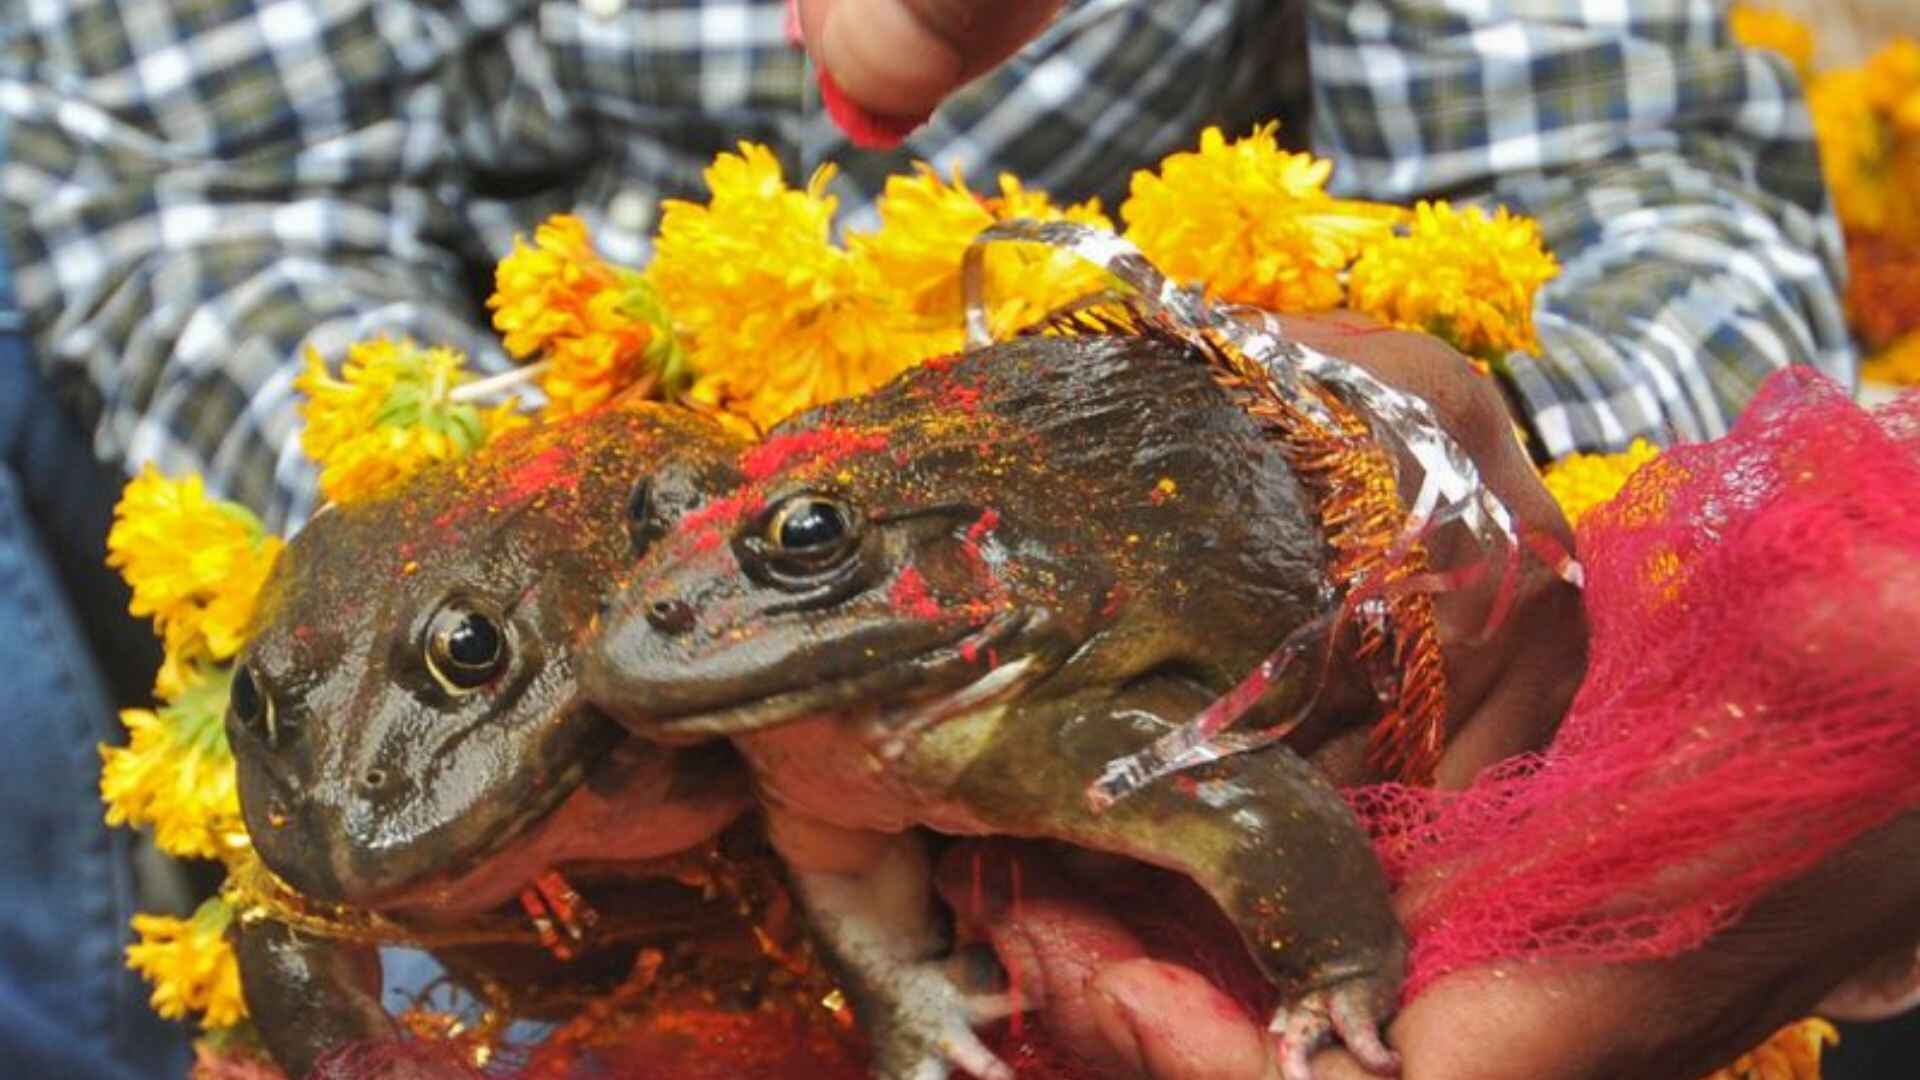 Frog Wedding in Varanasi Amid Heatwave: Residents Pray for Rain